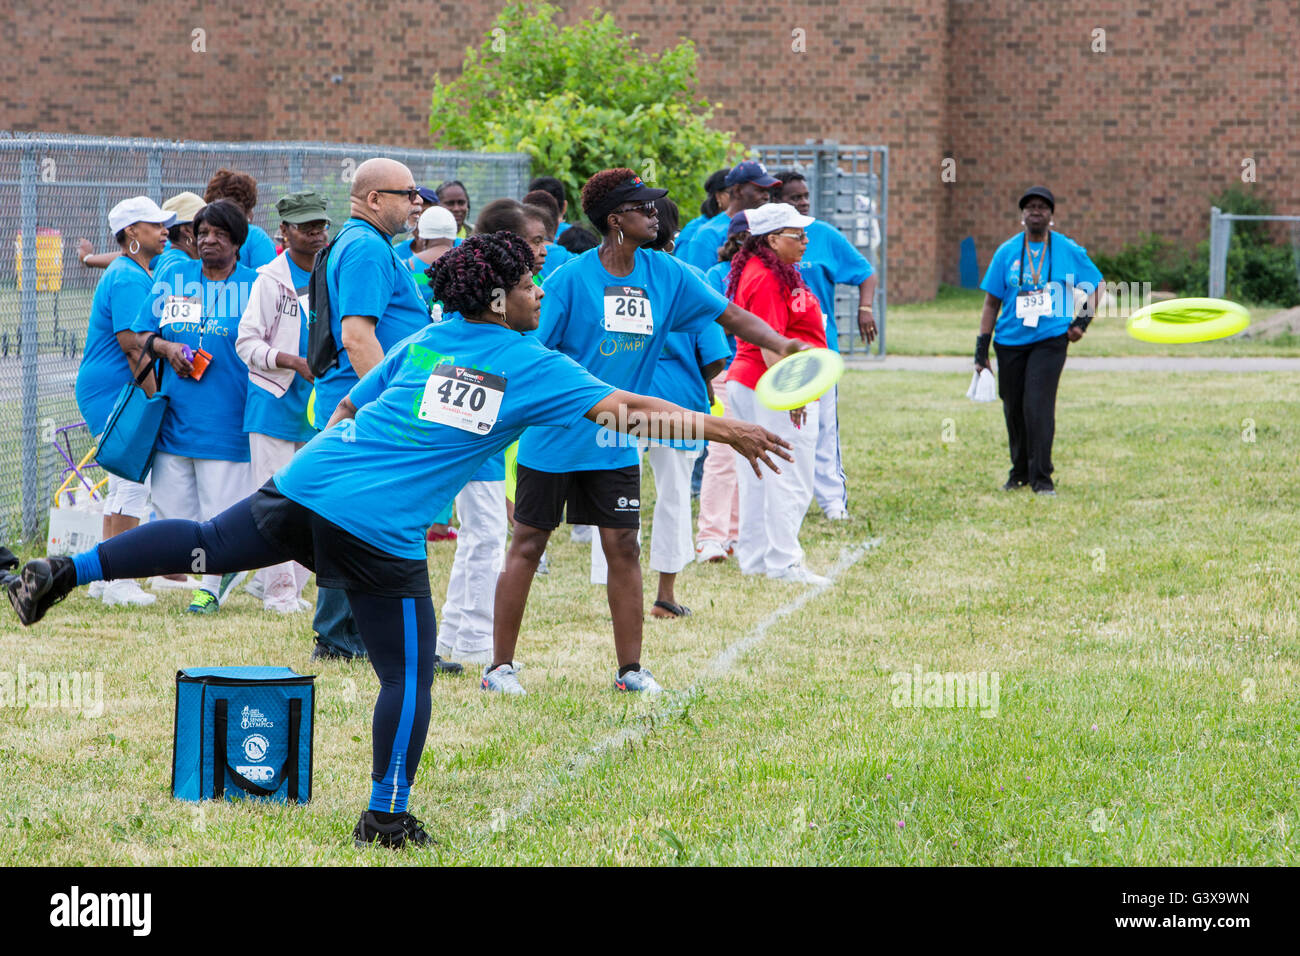 Detroit, Michigan - The frisbee toss in the Detroit Recreation Department's Senior Olympics. Stock Photo